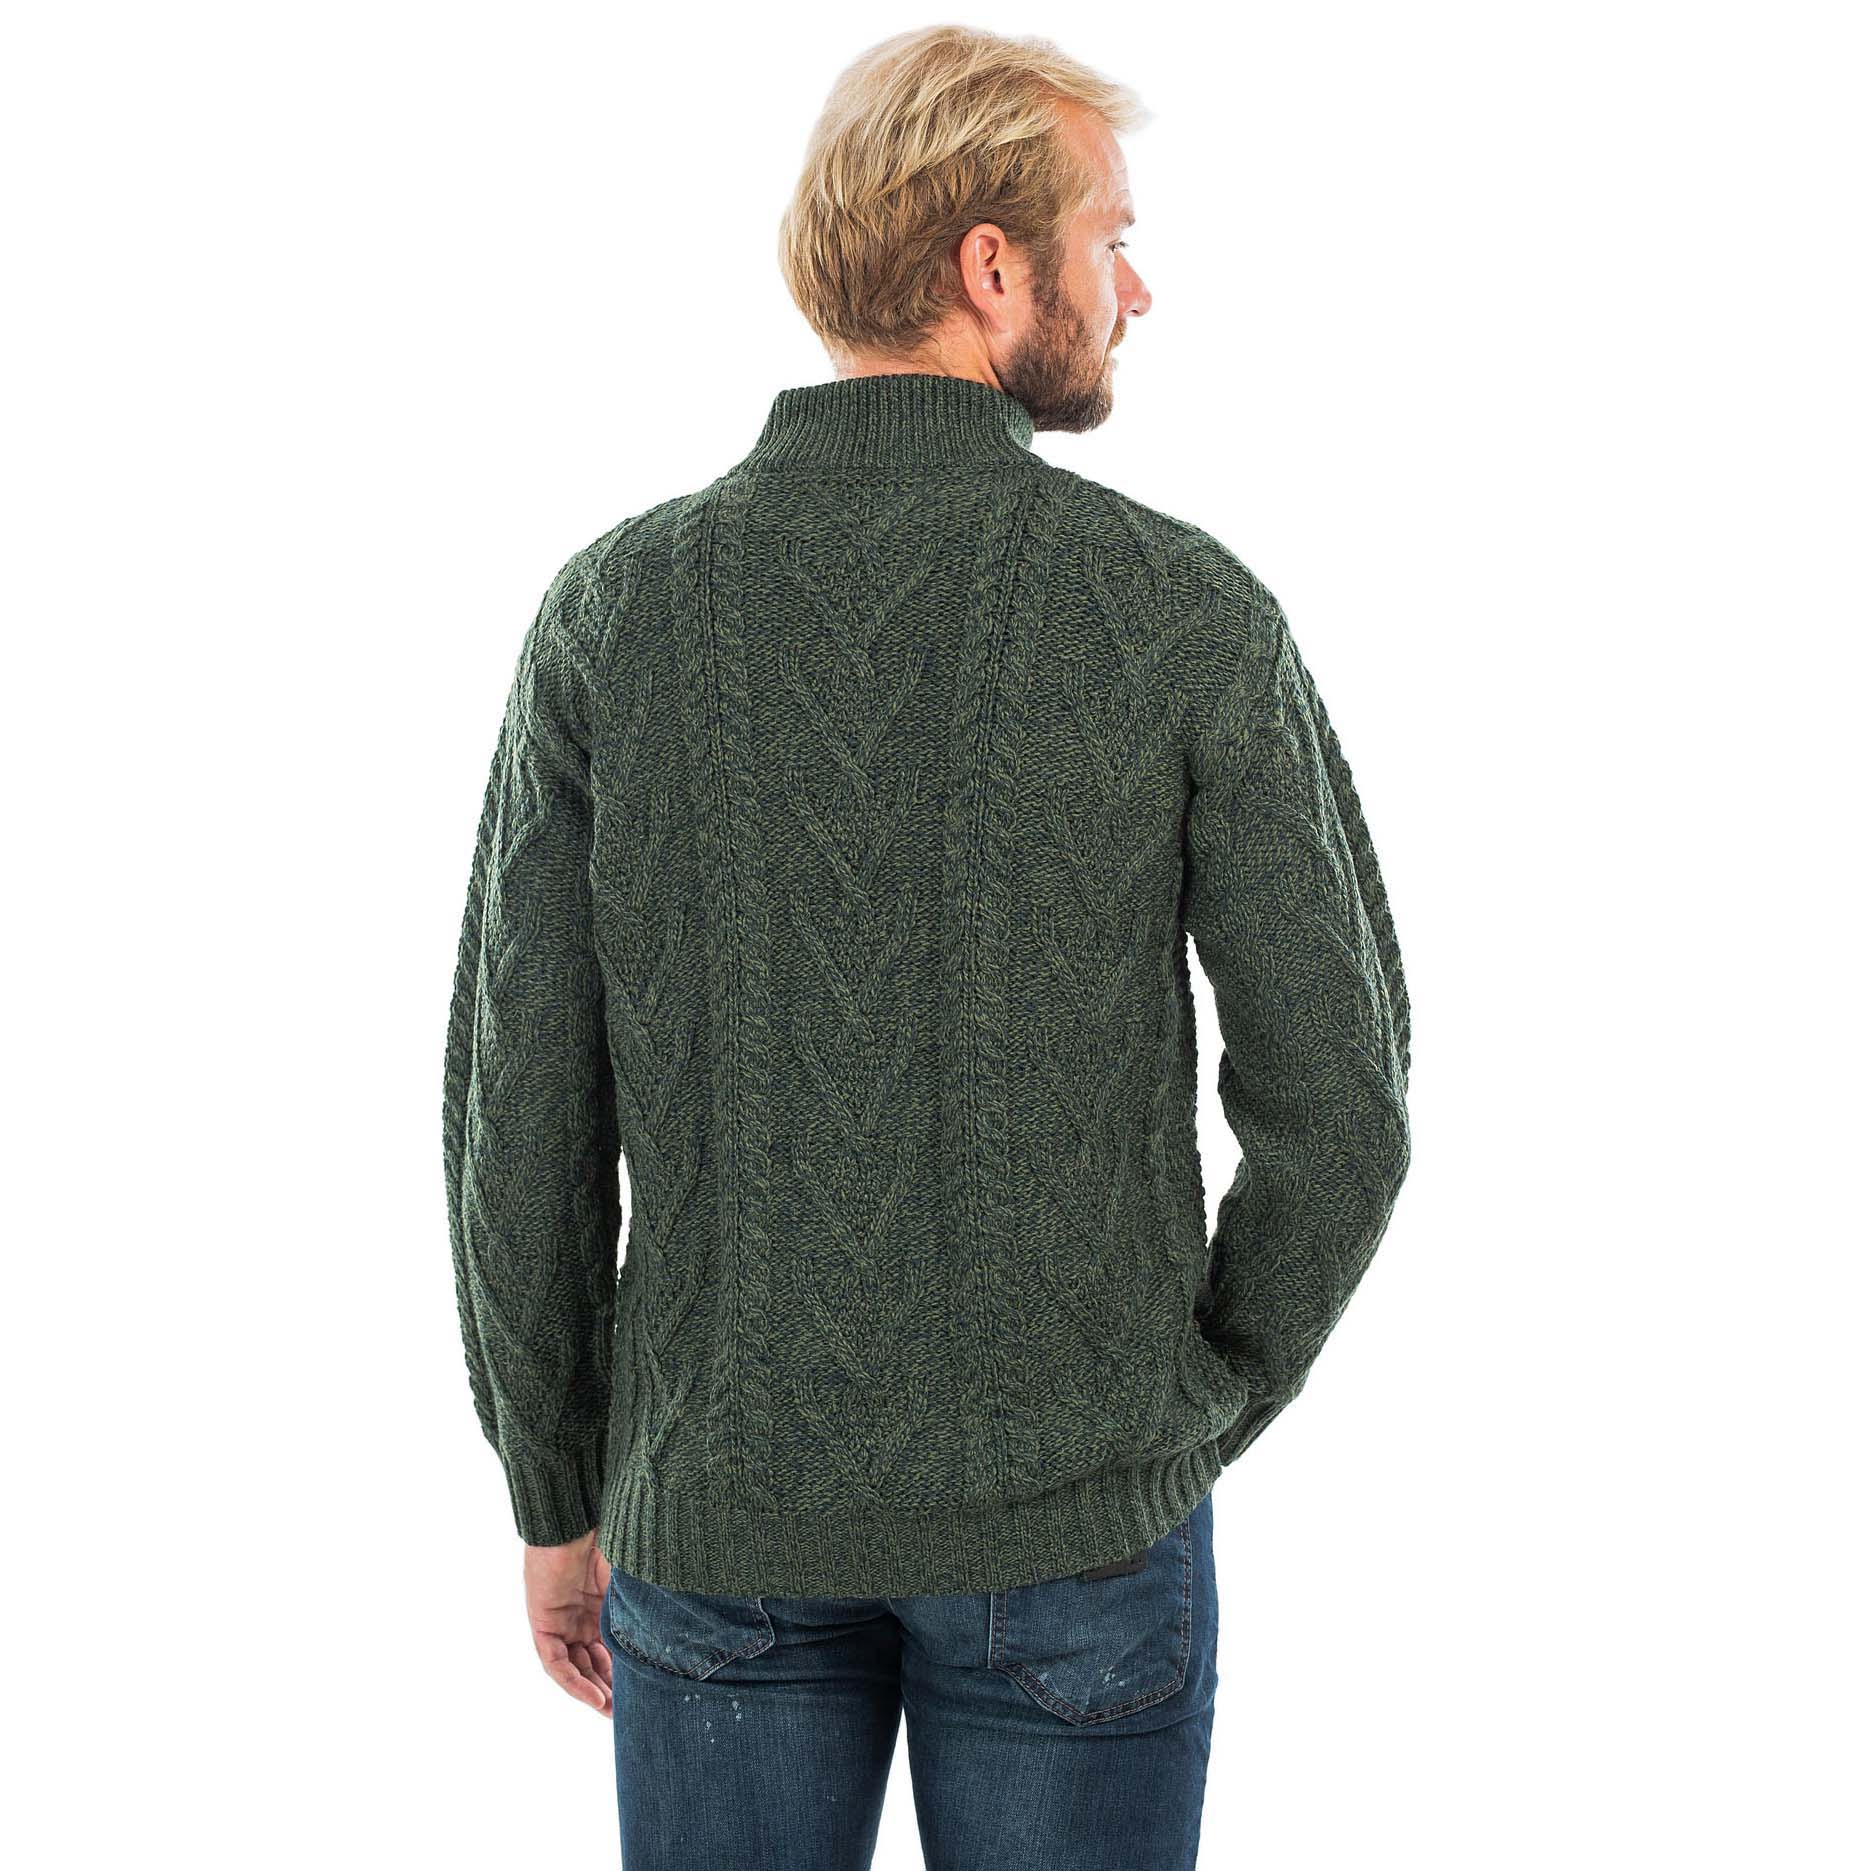 SAOL 100% Merino Wool Men's Aran Cable Knit Irish Sweater Fisherman Pullover